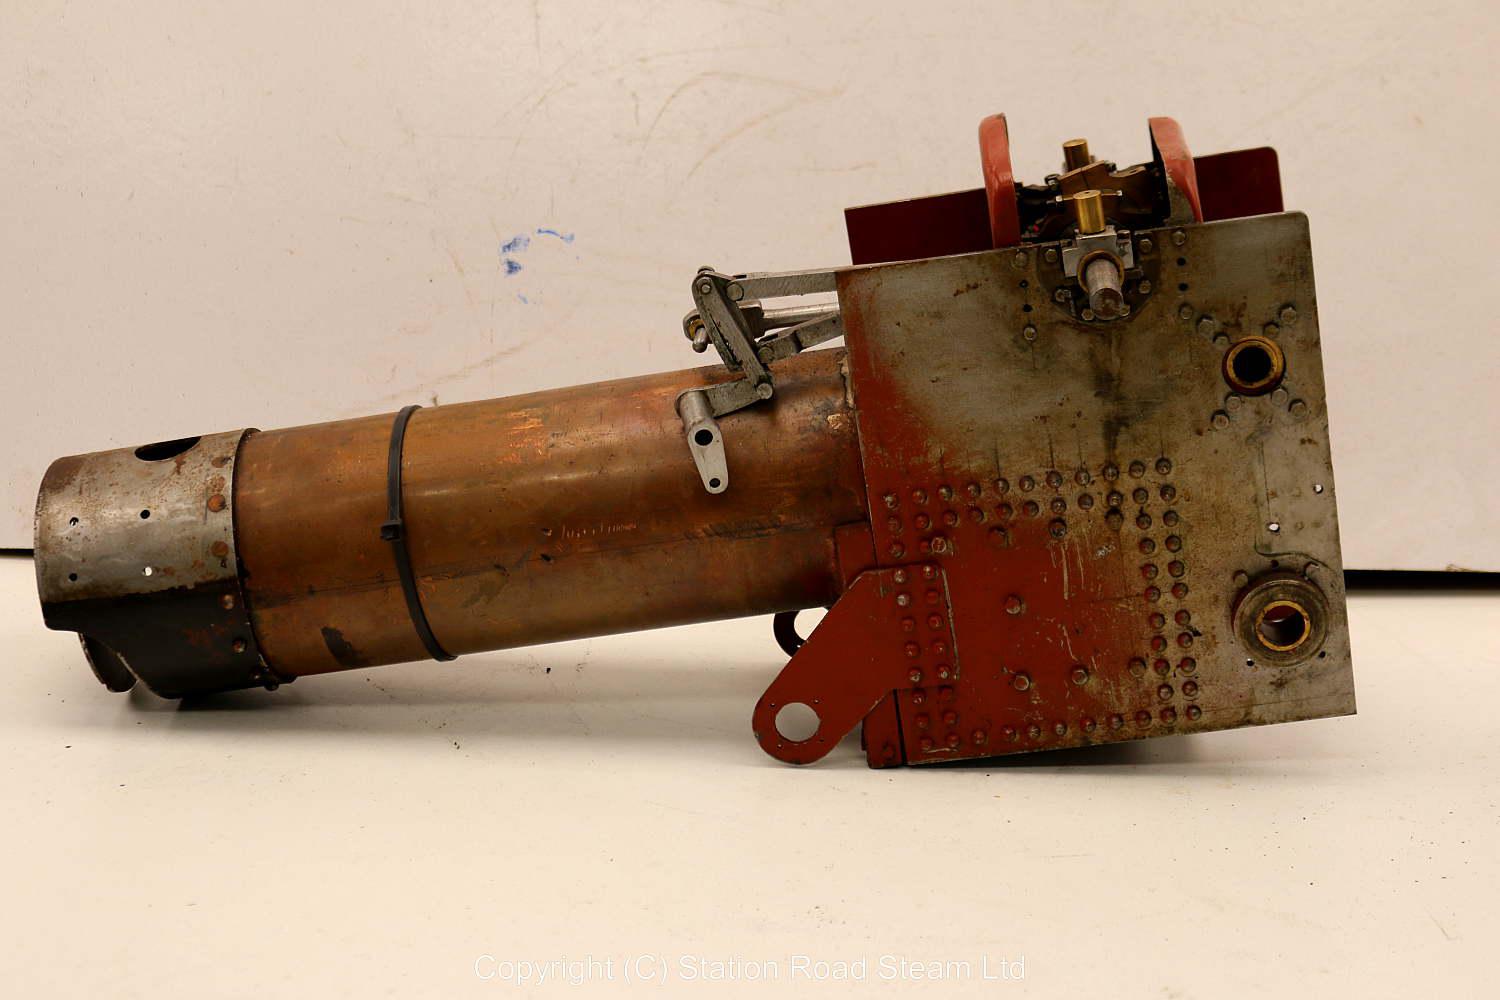 2 inch scale Burrell steam roller